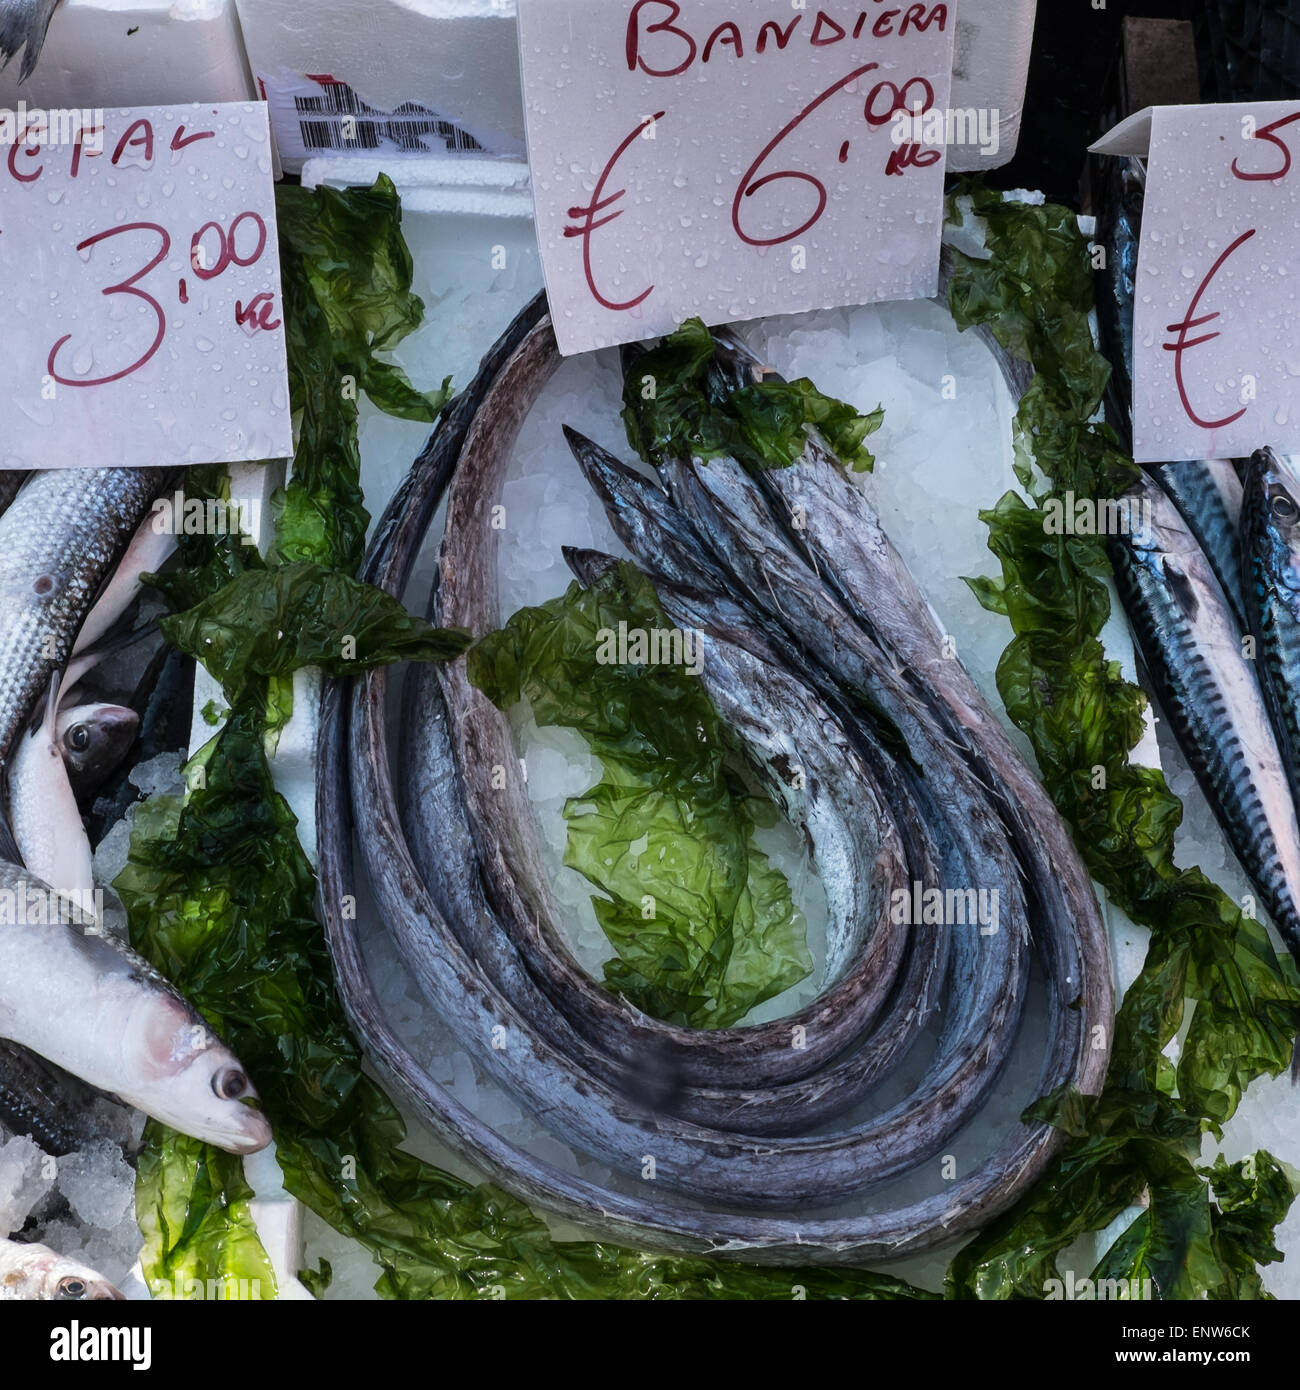 lepidopus caudatus, pesce bandiera in italian, at fish market,Naples Stock  Photo - Alamy